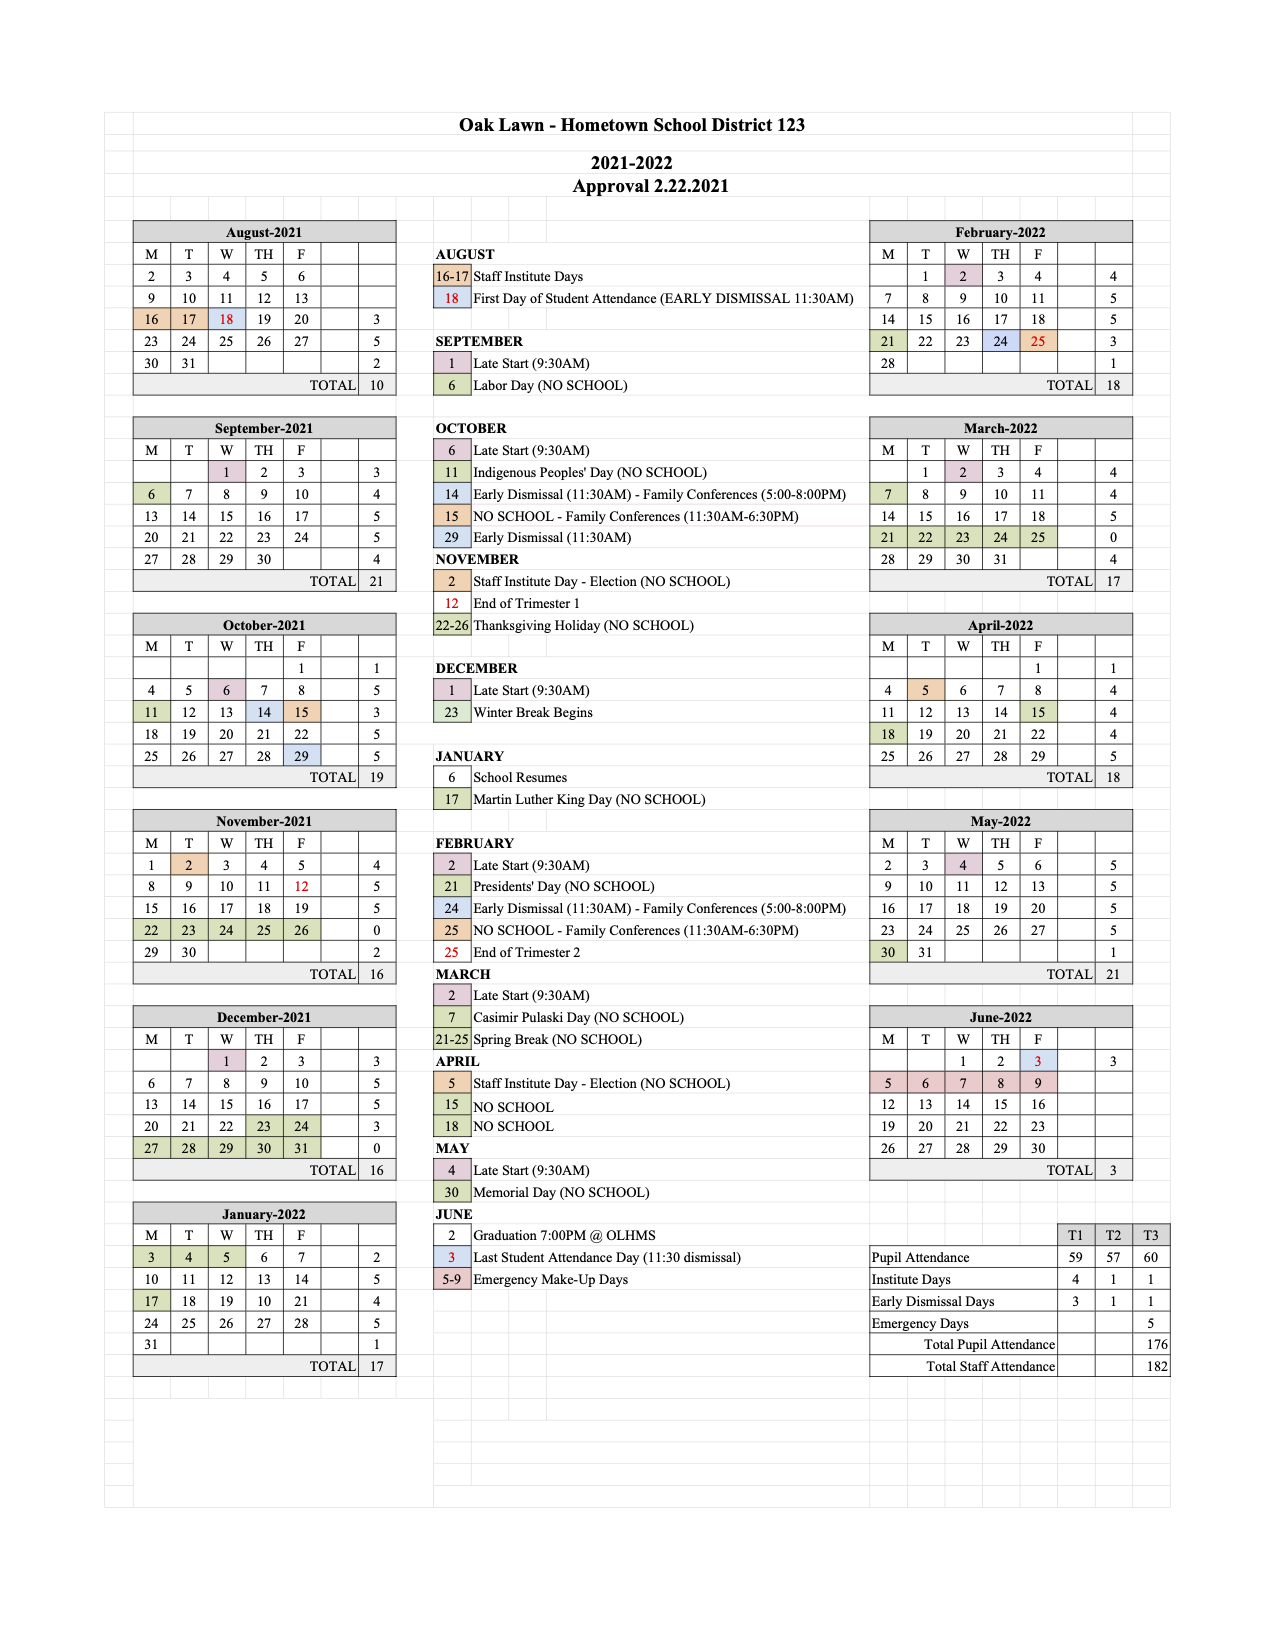 Calendar_2021-2022